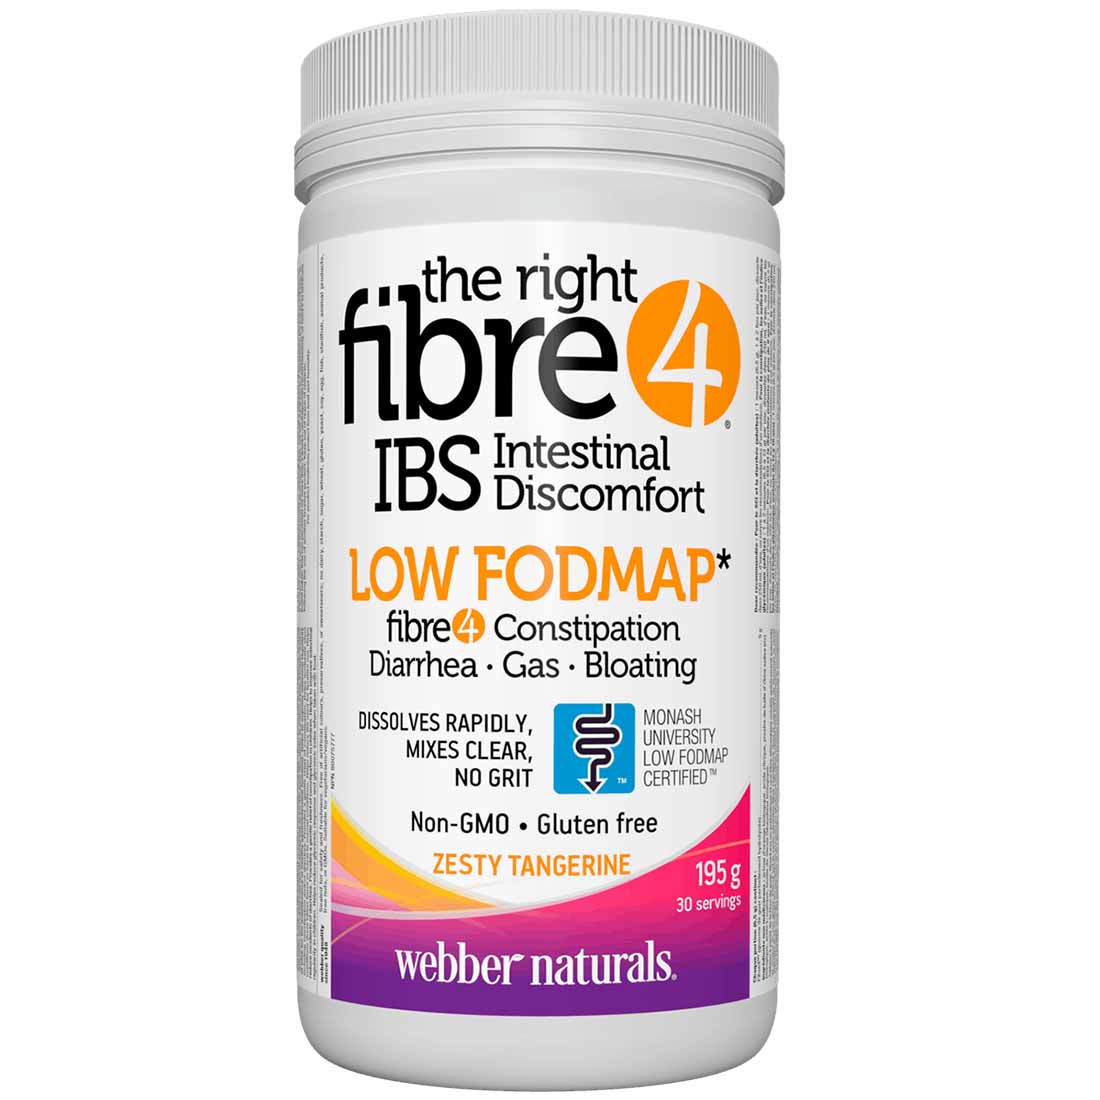 Webber Naturals Fibre 4 IBS Intestinal Discomfort, Low FODMAP, Gluten-Free and Non-GMO, 150g / 30 Servings